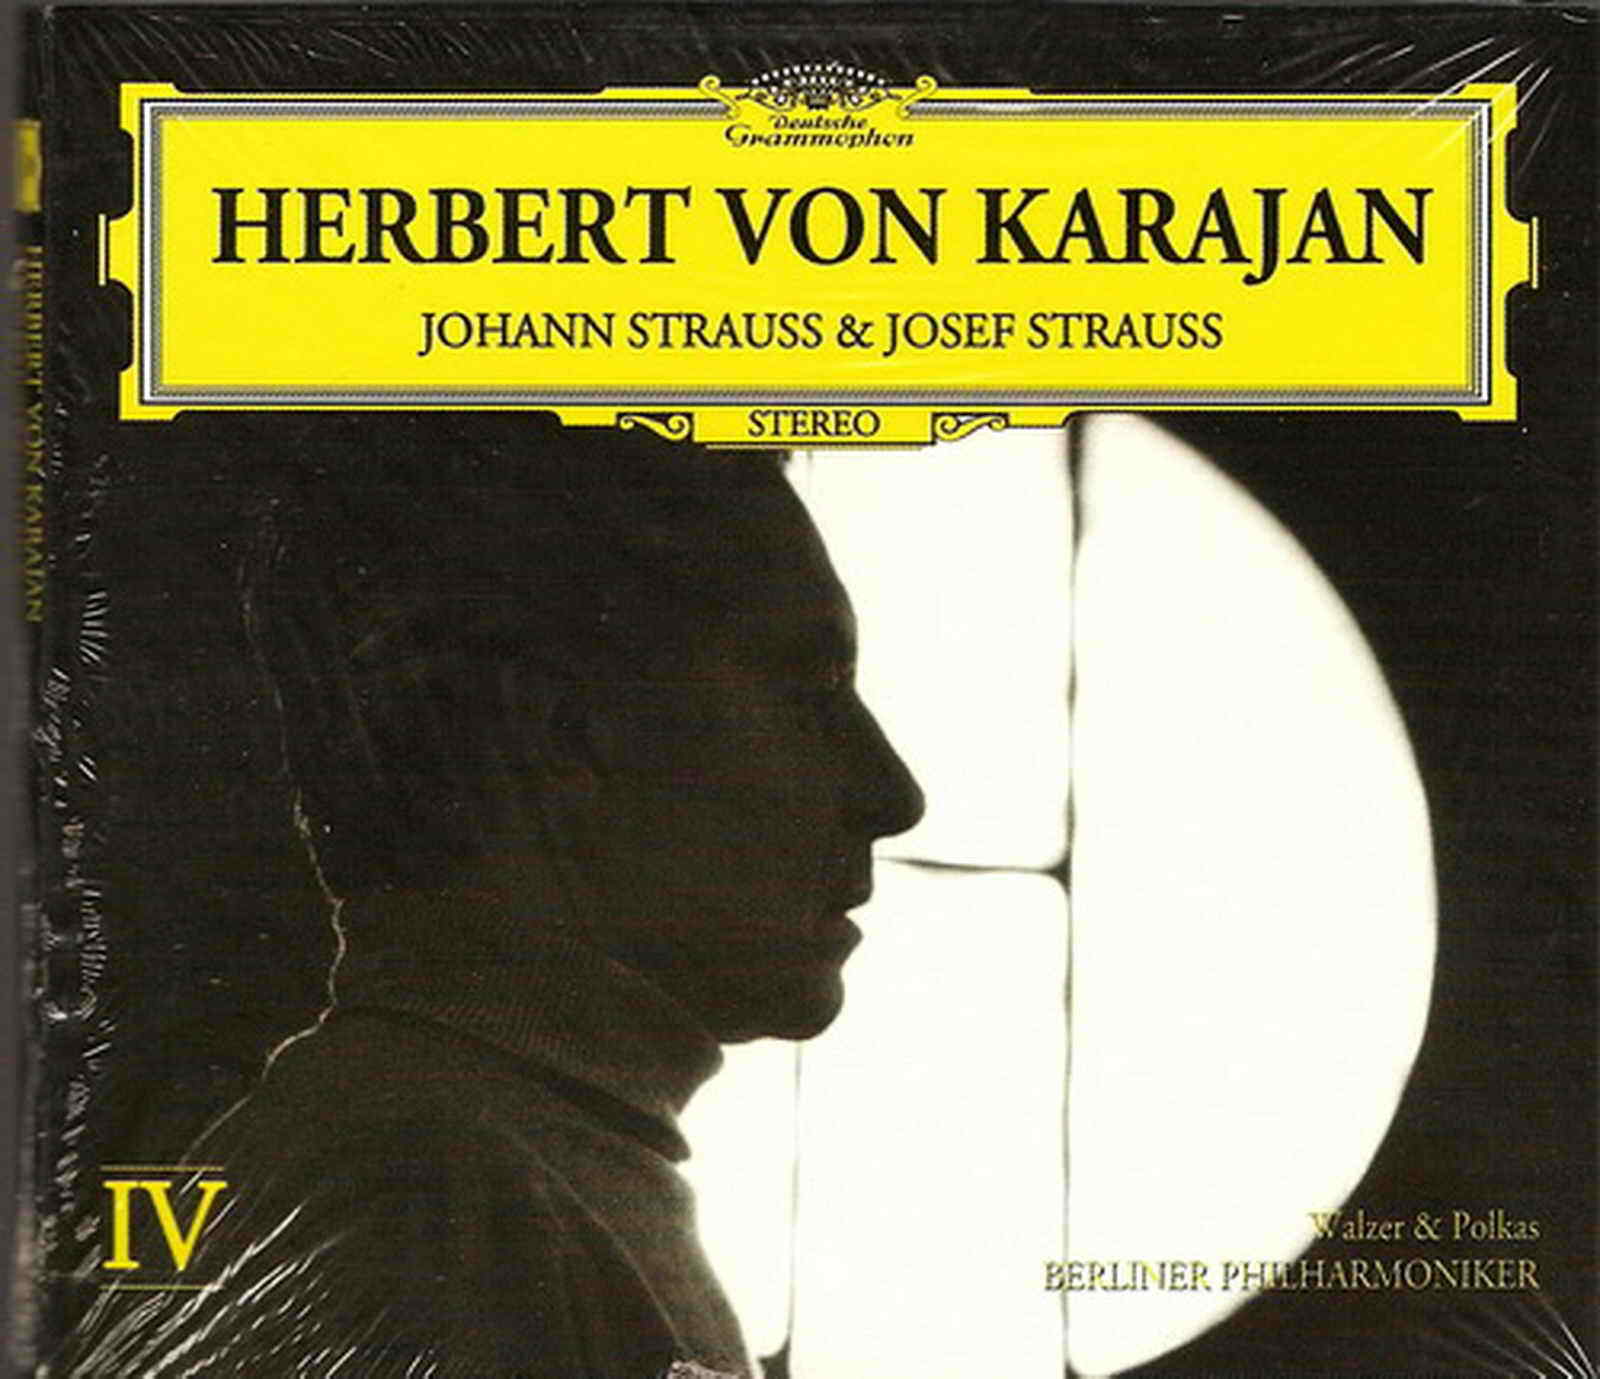 Primary image for HERBERT VON KARAJAN JOHANN STRAUSS & JOSEF STRAUSS rare CD